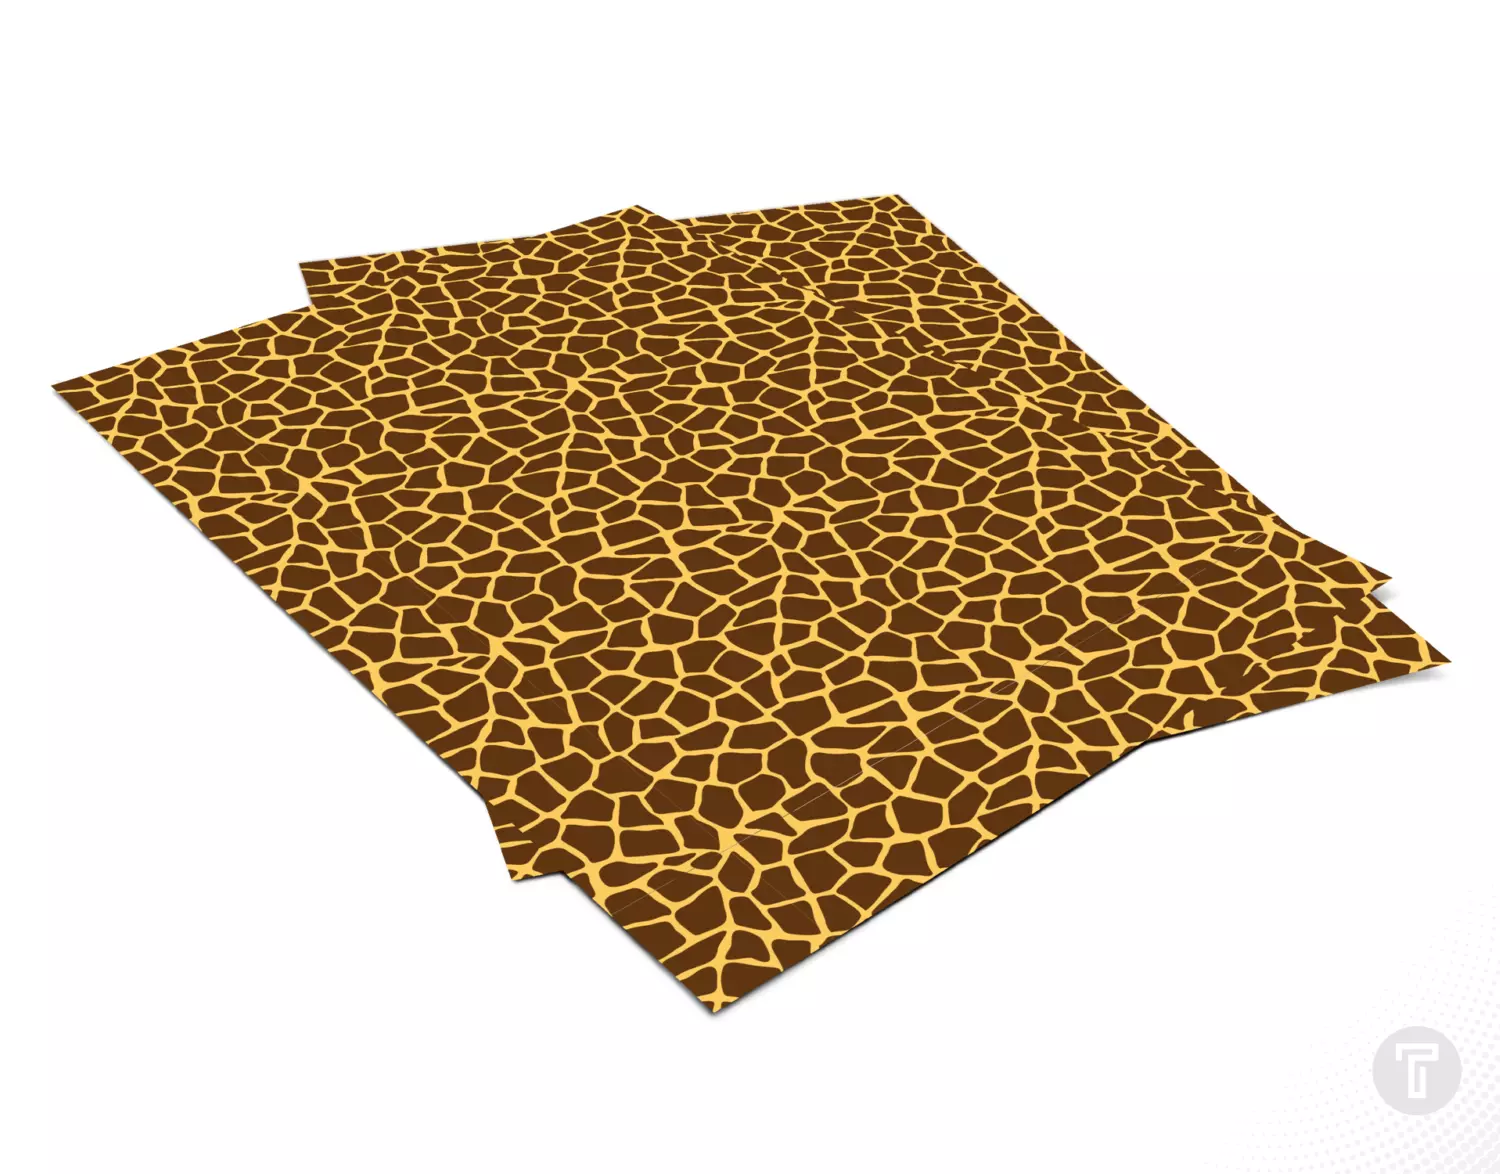 Tps patterns vinyl giraffe